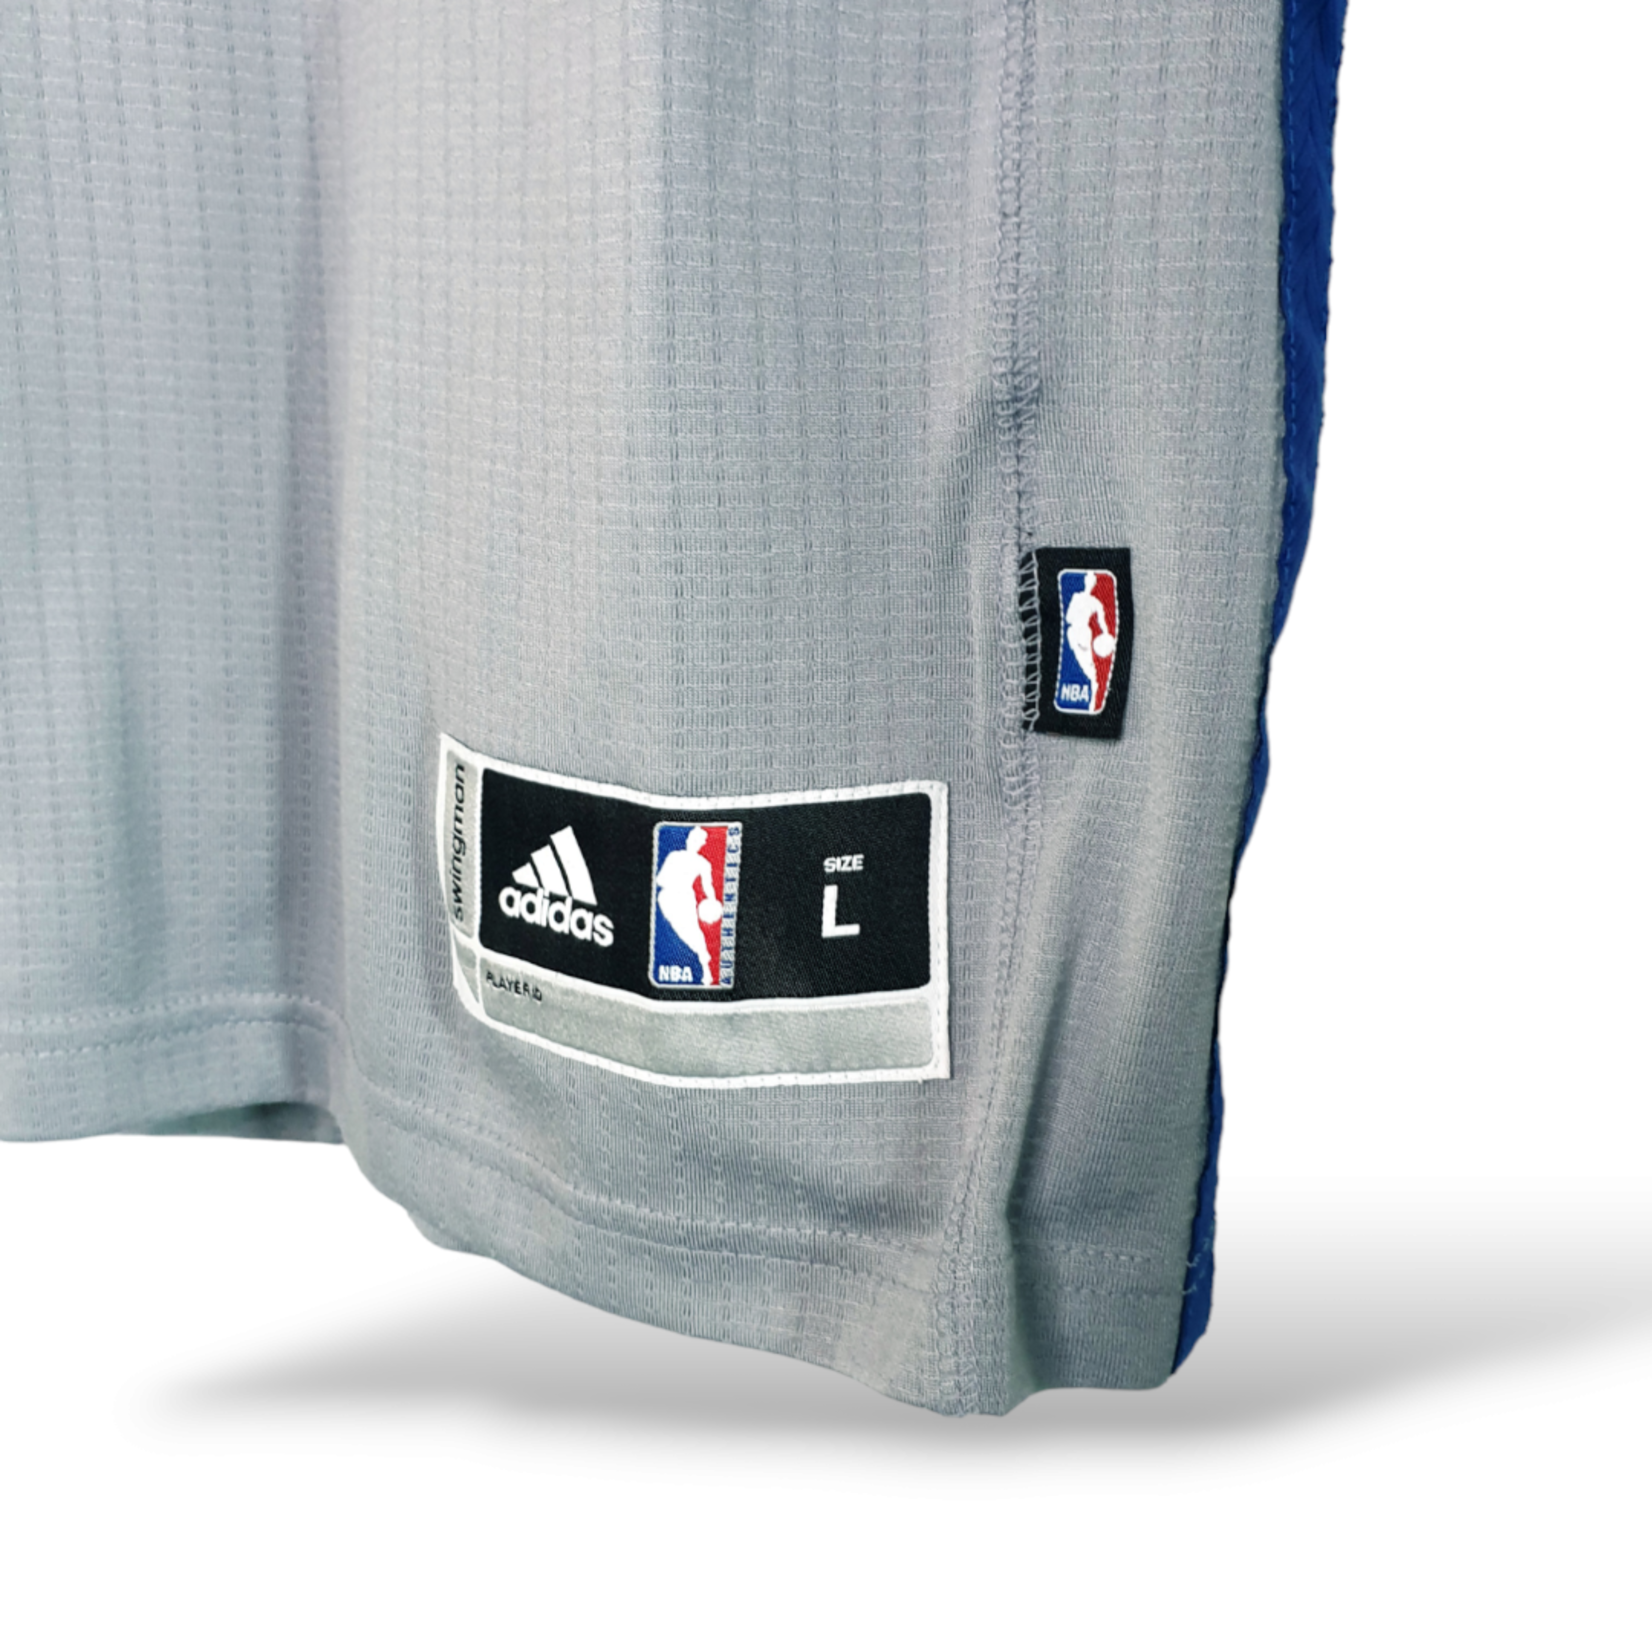 Adidas Adidas vintage NBA shirt Brooklyn Nets 2014 #11 Lopez